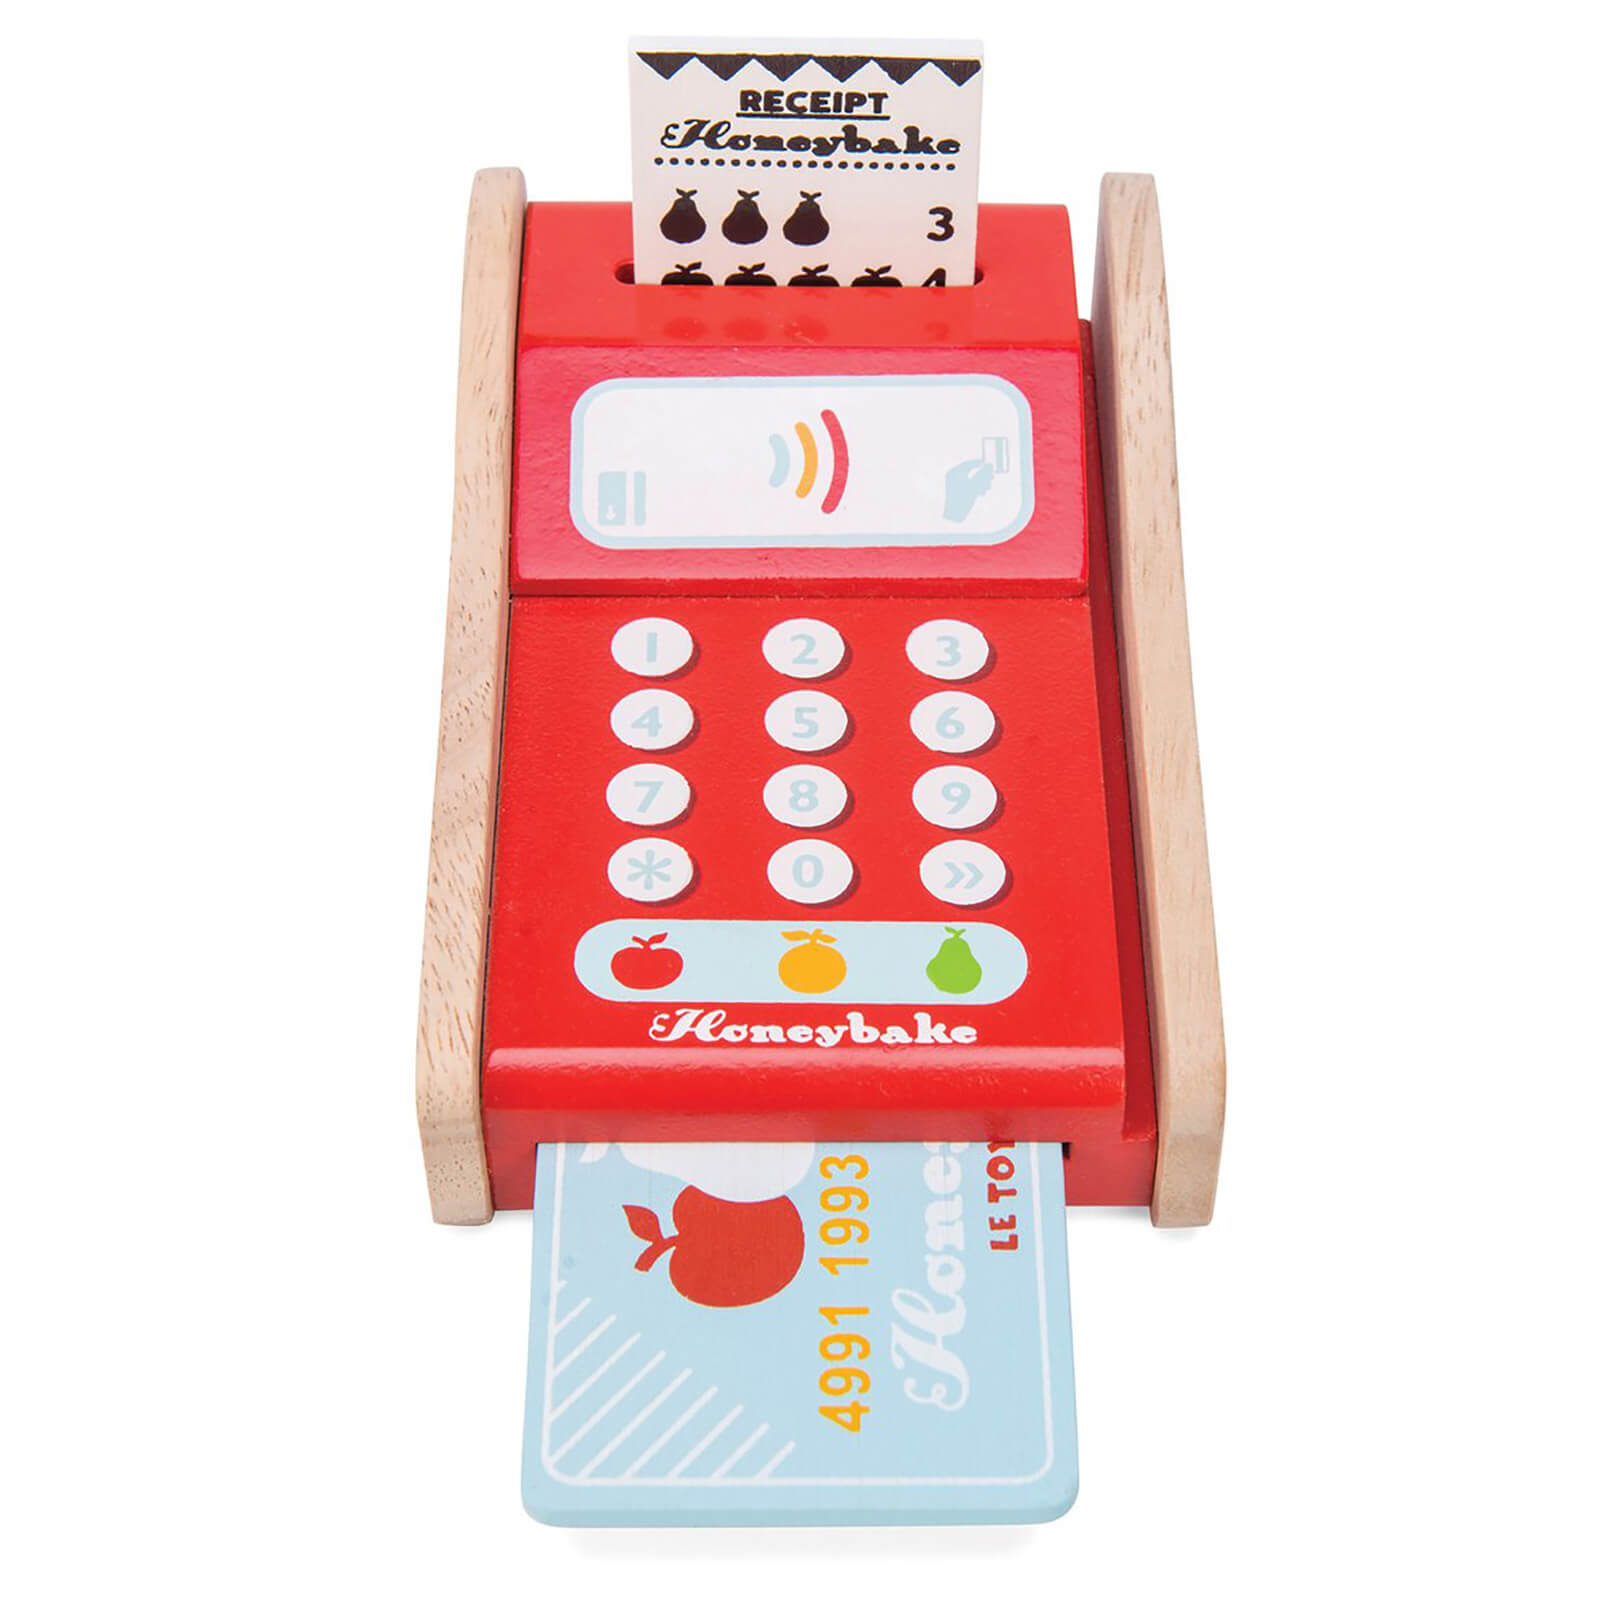 Image of Le Toy Van Honeybake Card Machine